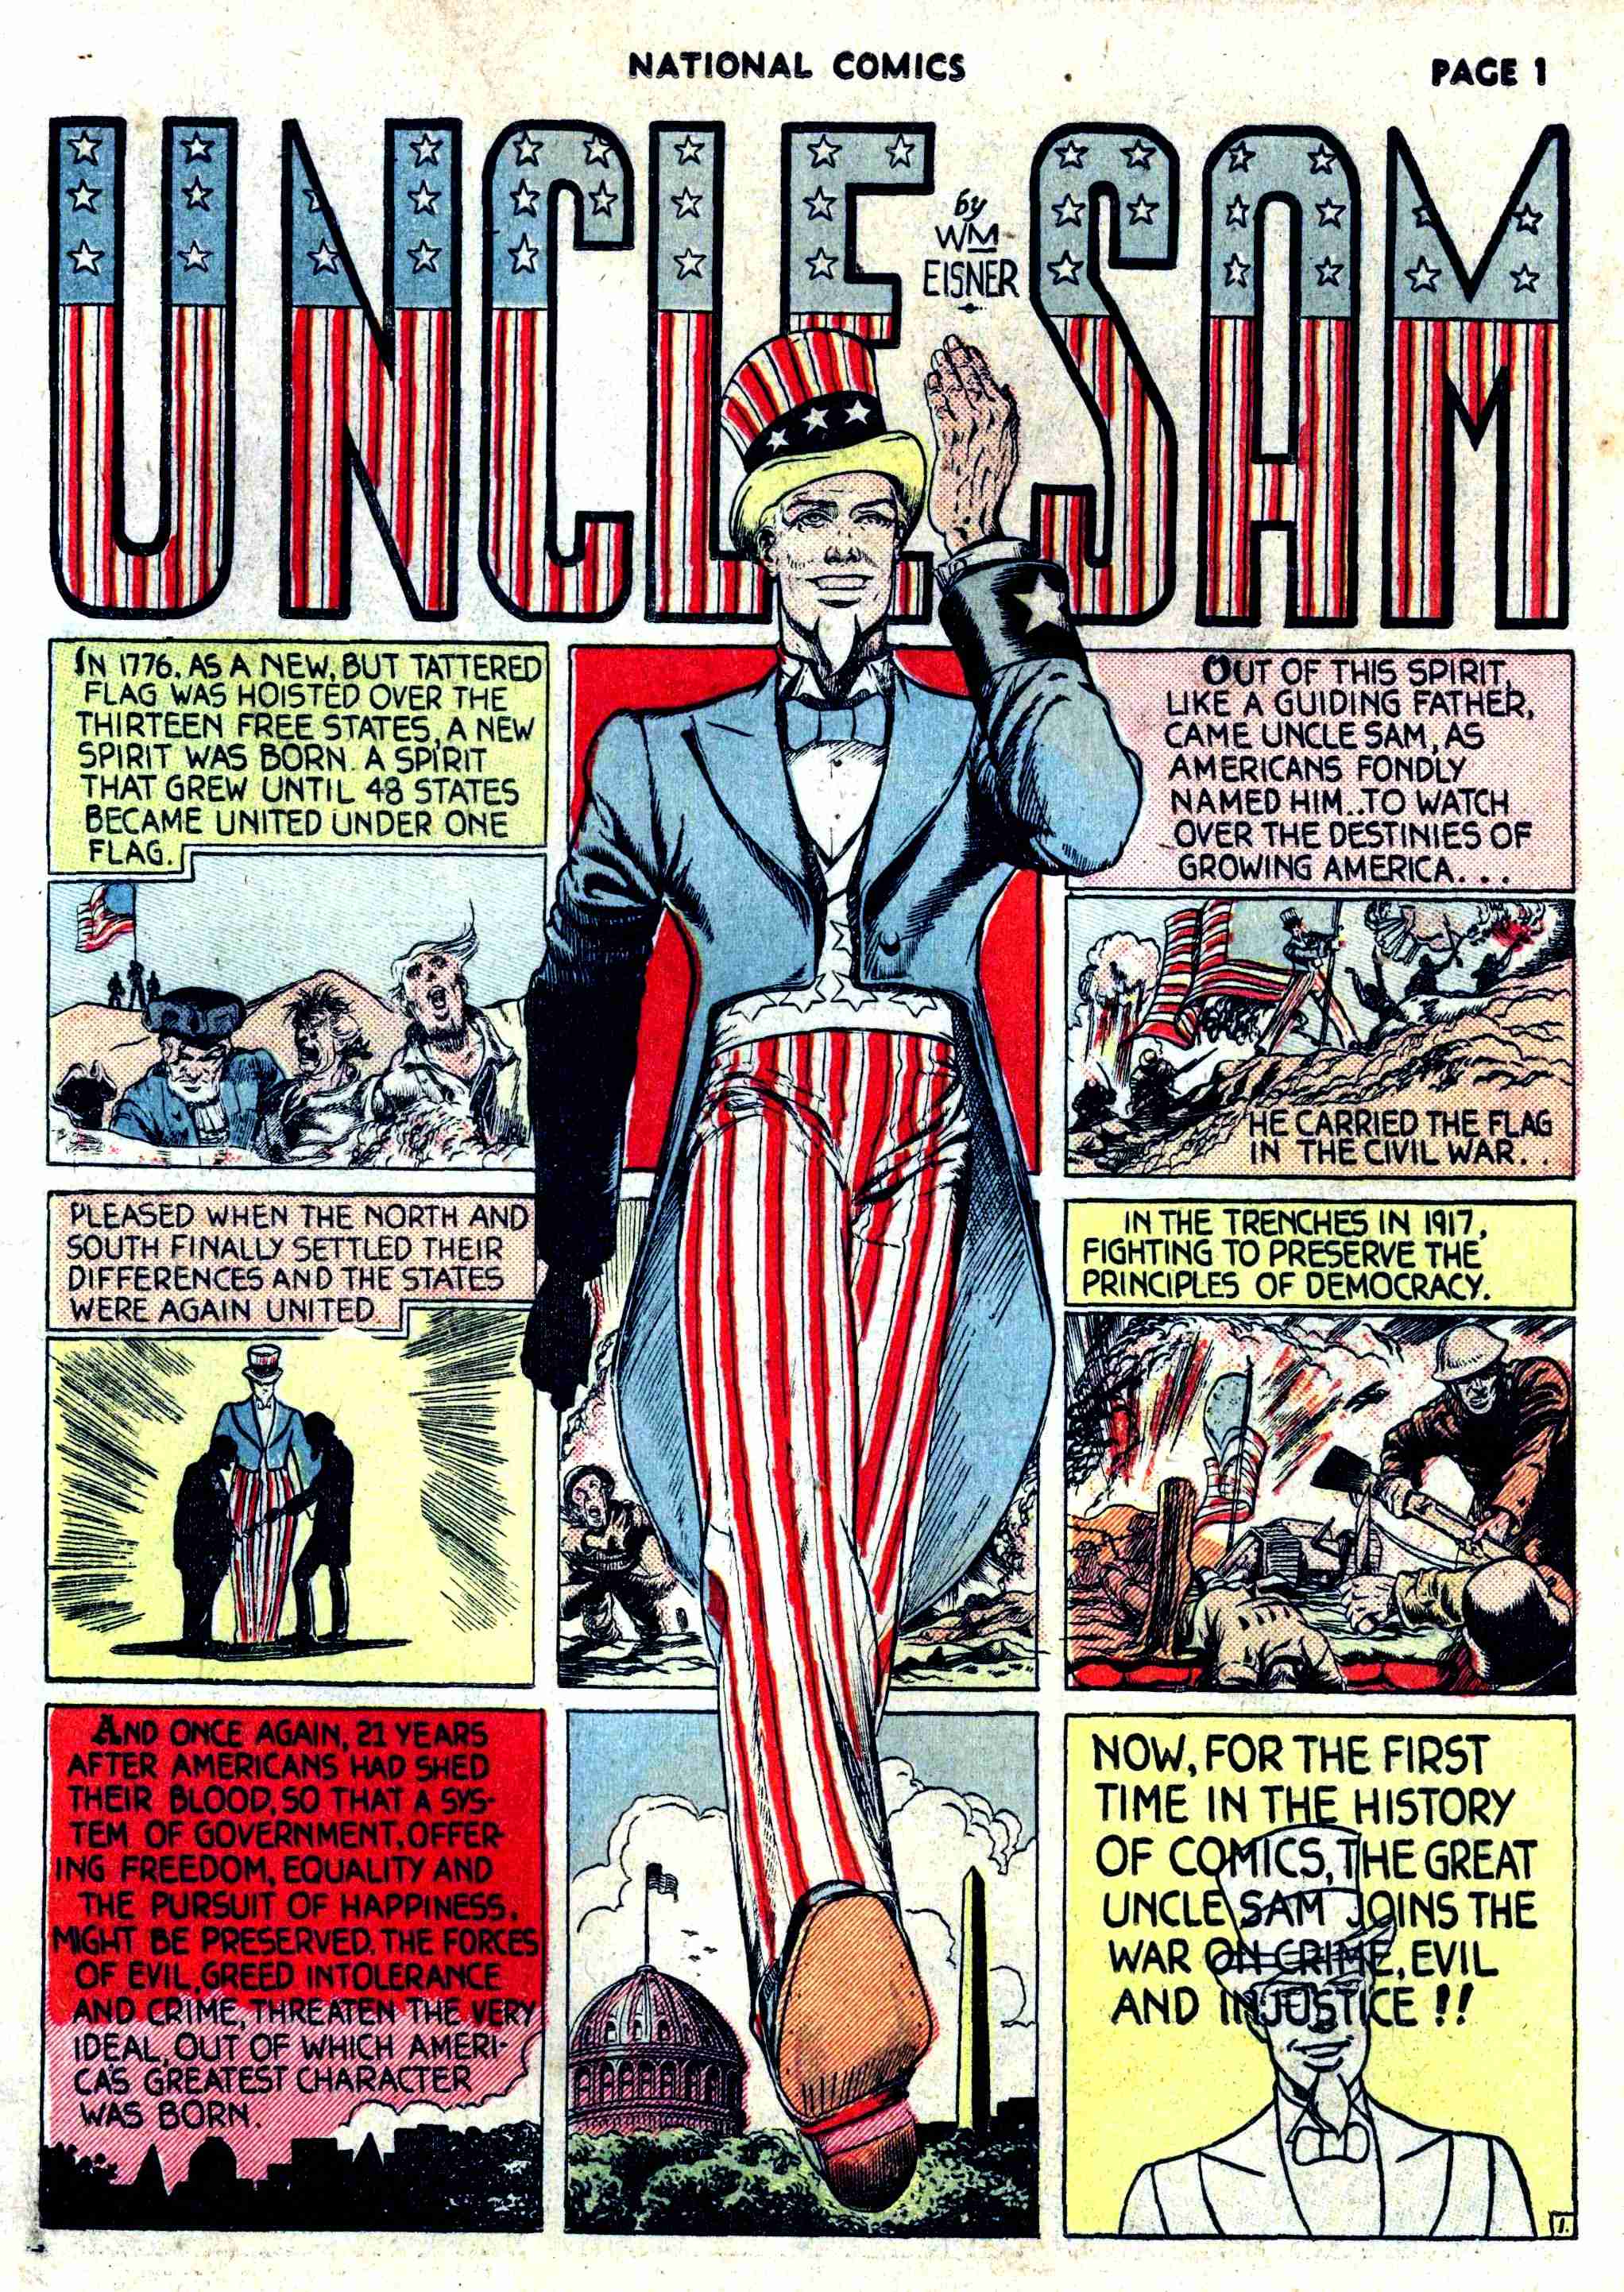 Read online National Comics comic -  Issue #1 - 3